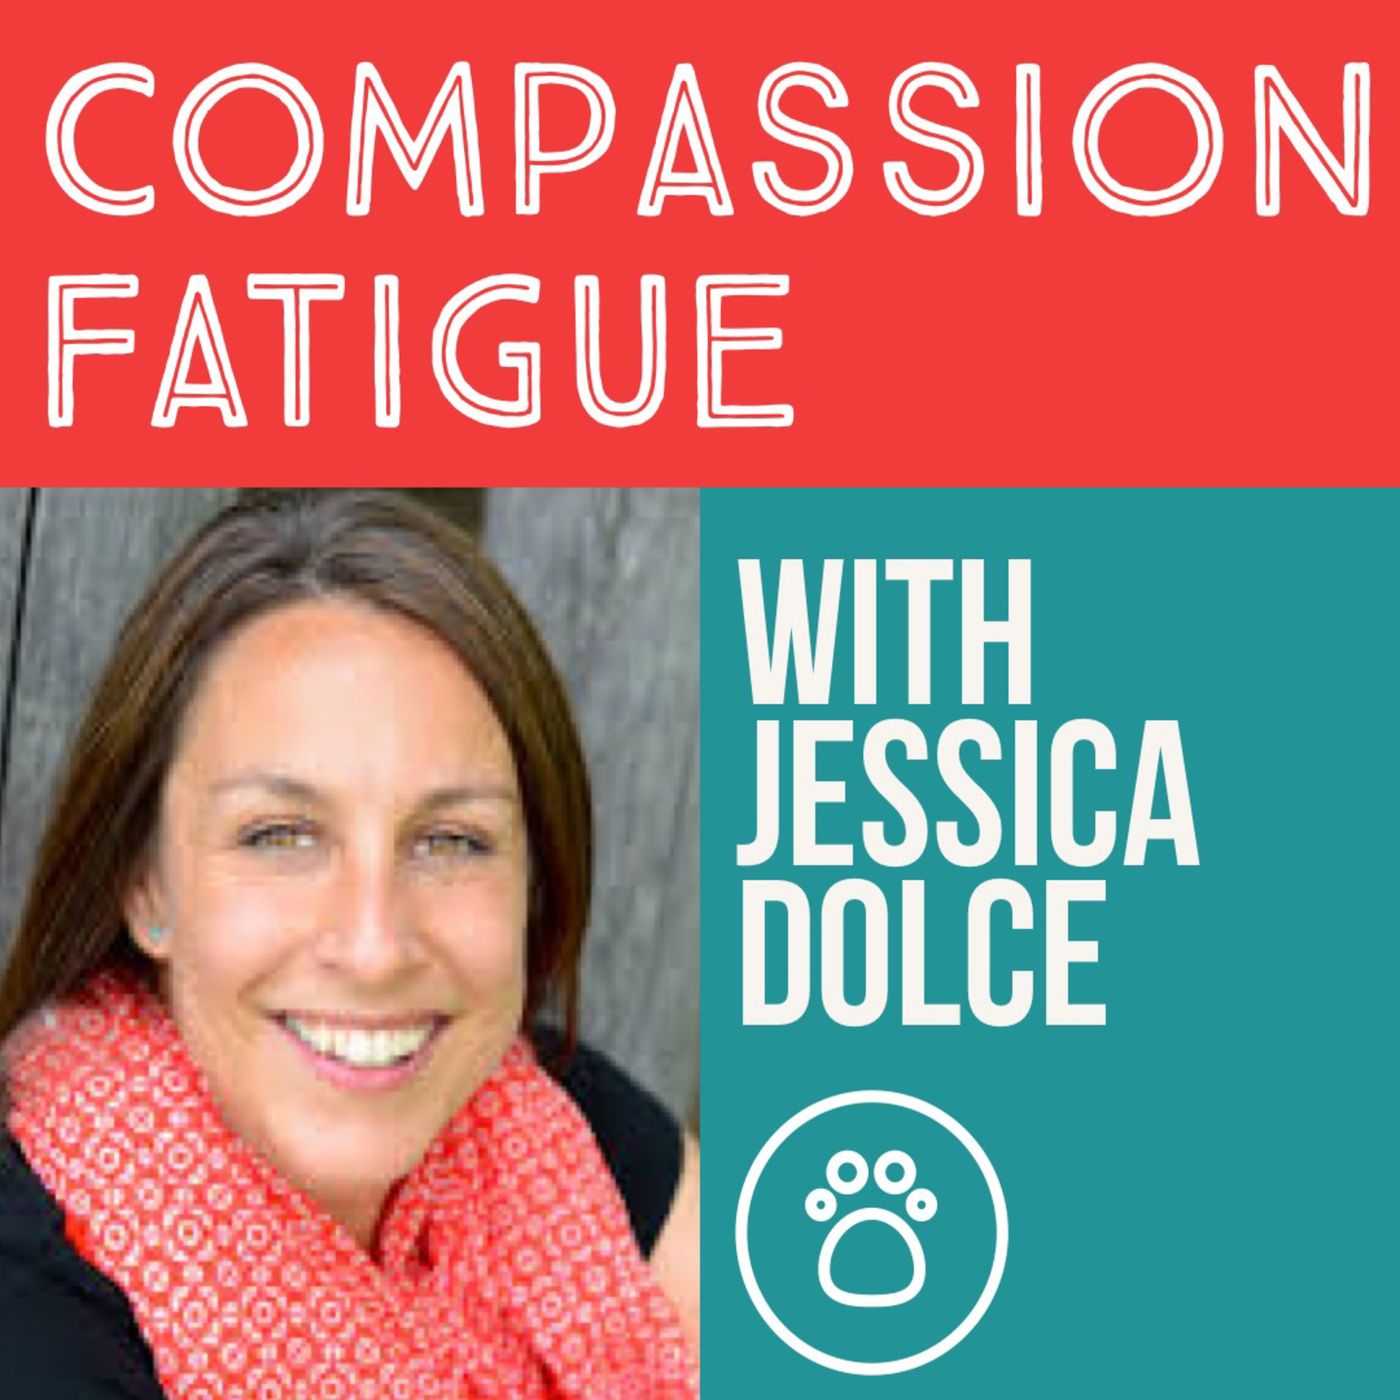 Compassion Fatigue Expert Jessica Dolce